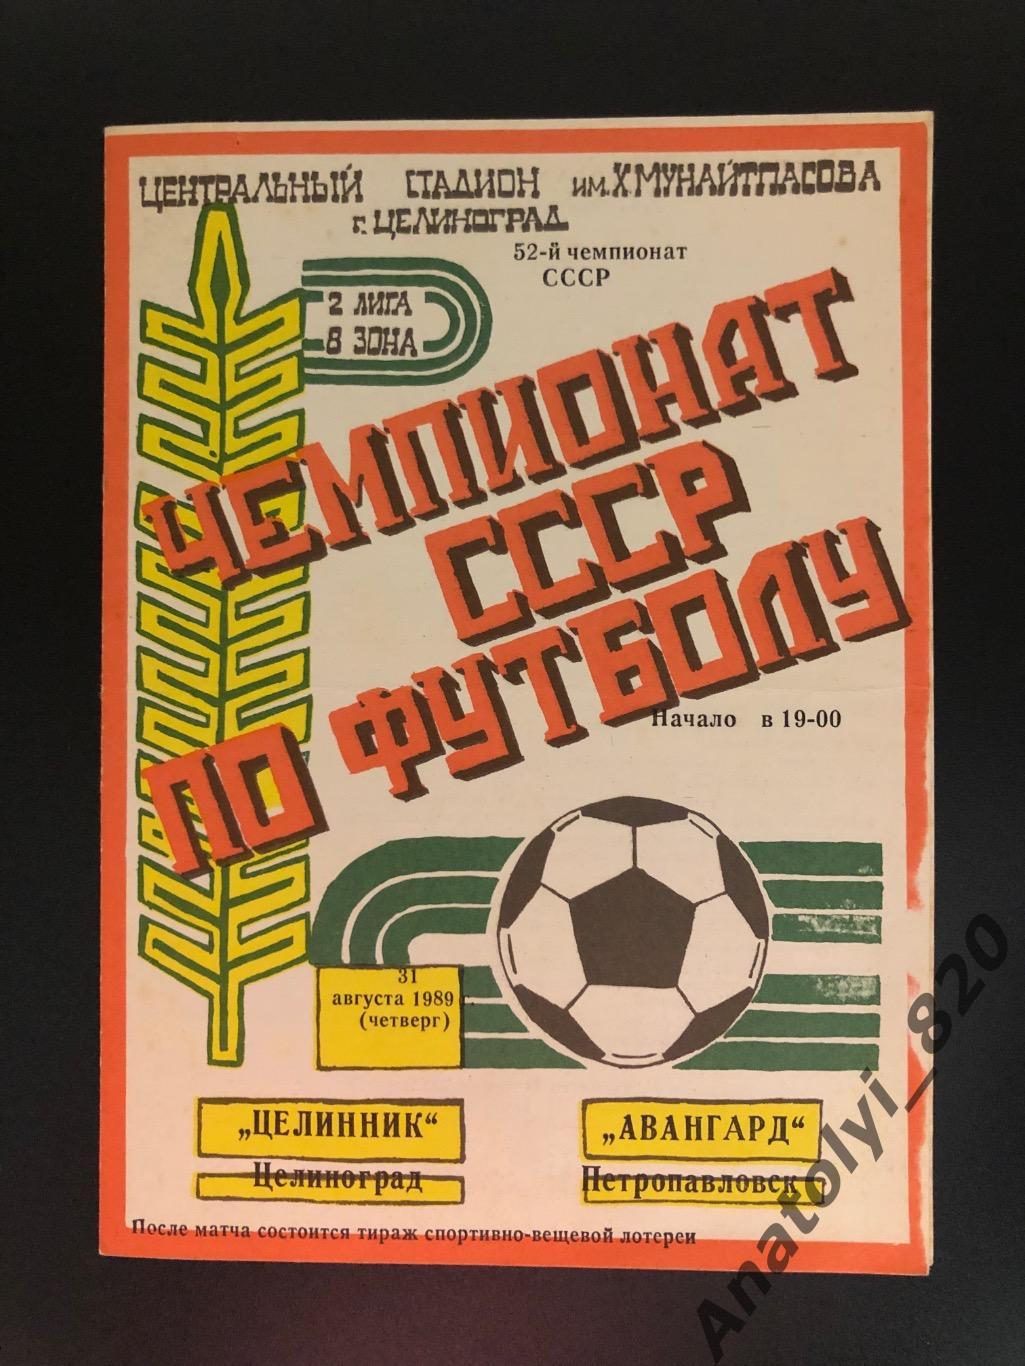 Целинник Целиноград - Авангард Петропавловск, 31.08.1989